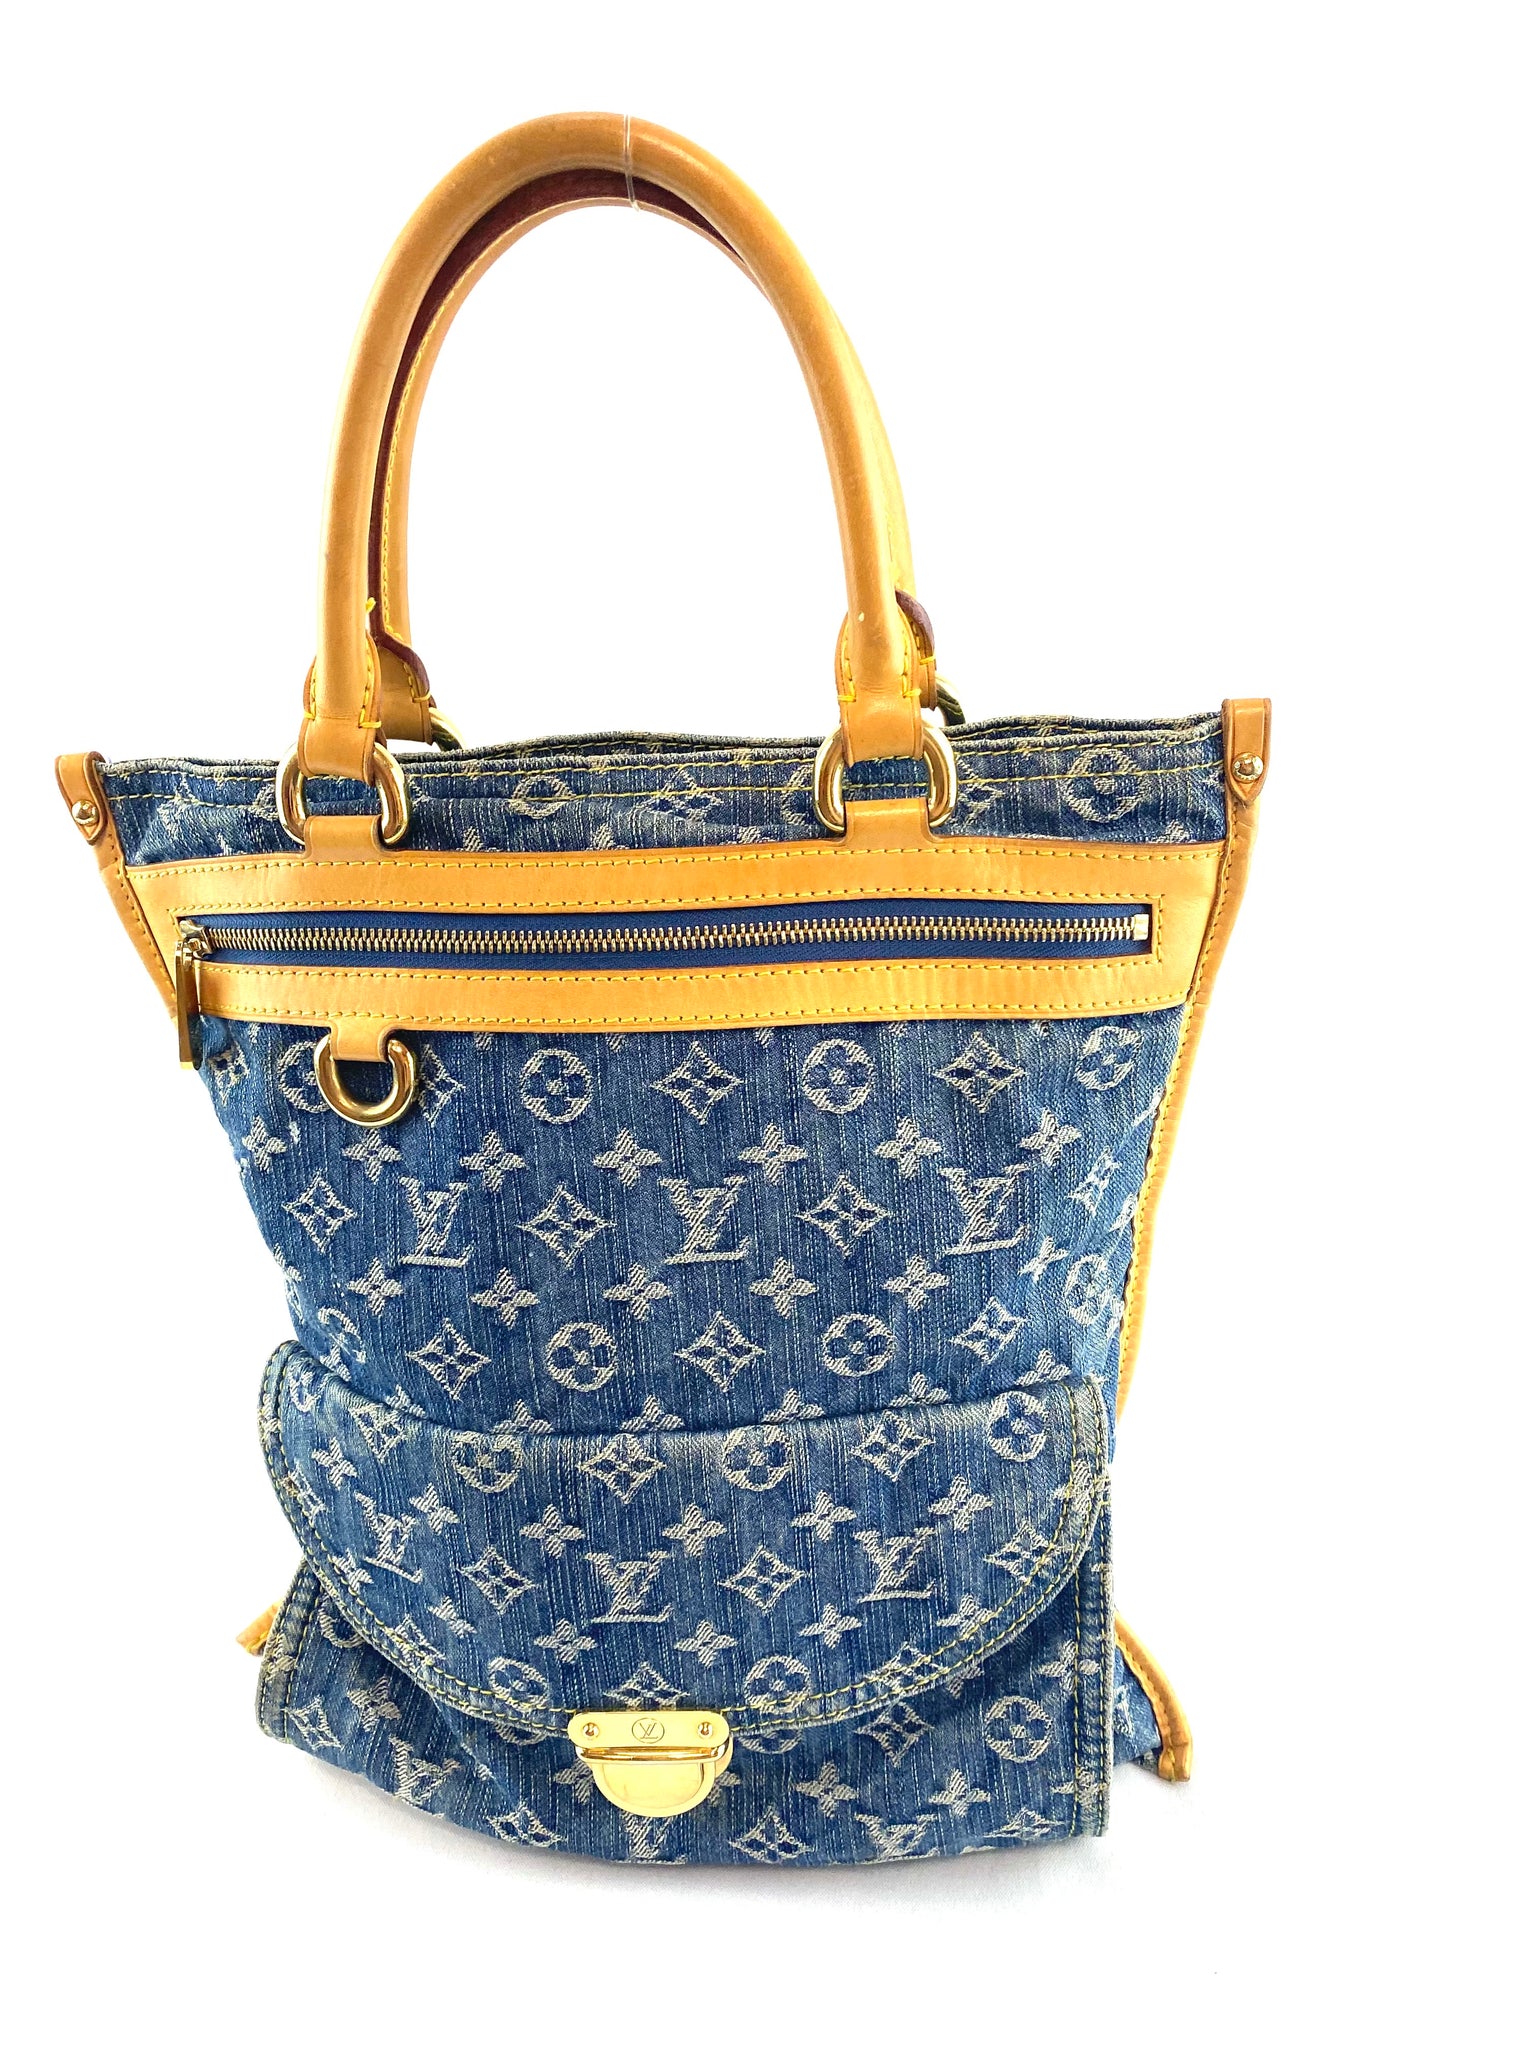 Louis Vuitton Blue Denim Monogram Sac Plat Tote Bag